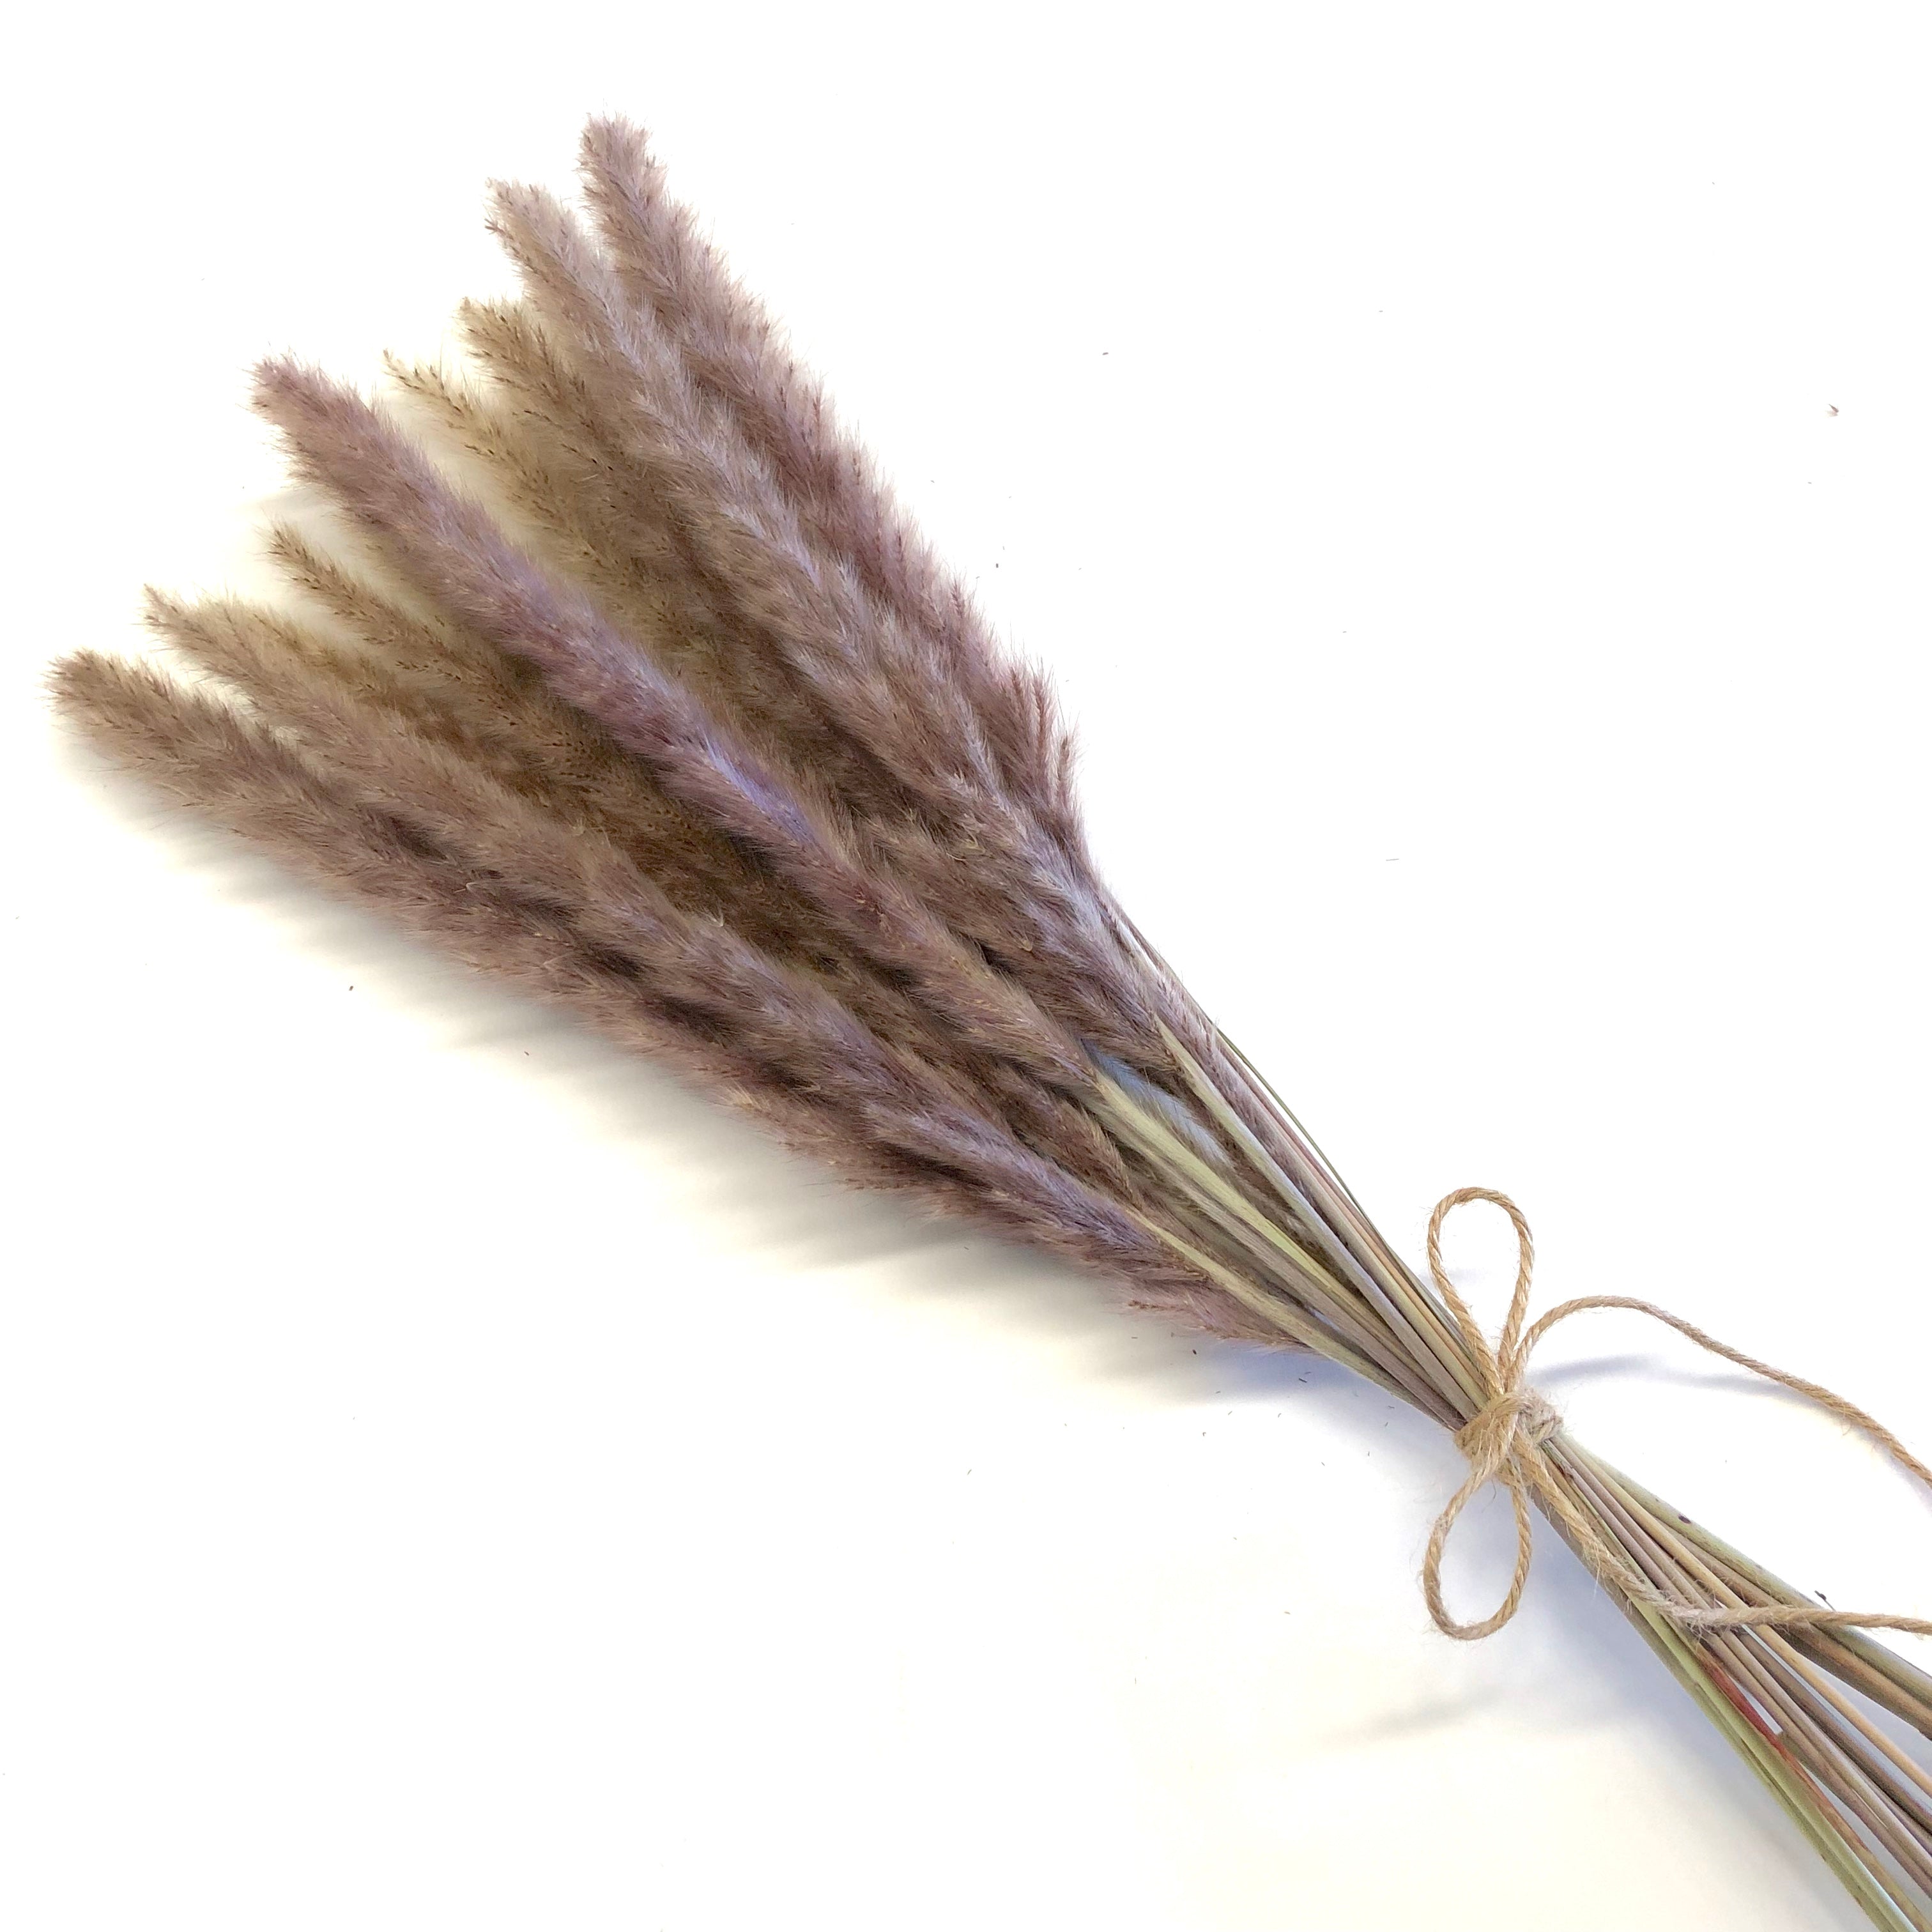 Dried Reed Blady Flower Grass 40-50cm Stem - Brown